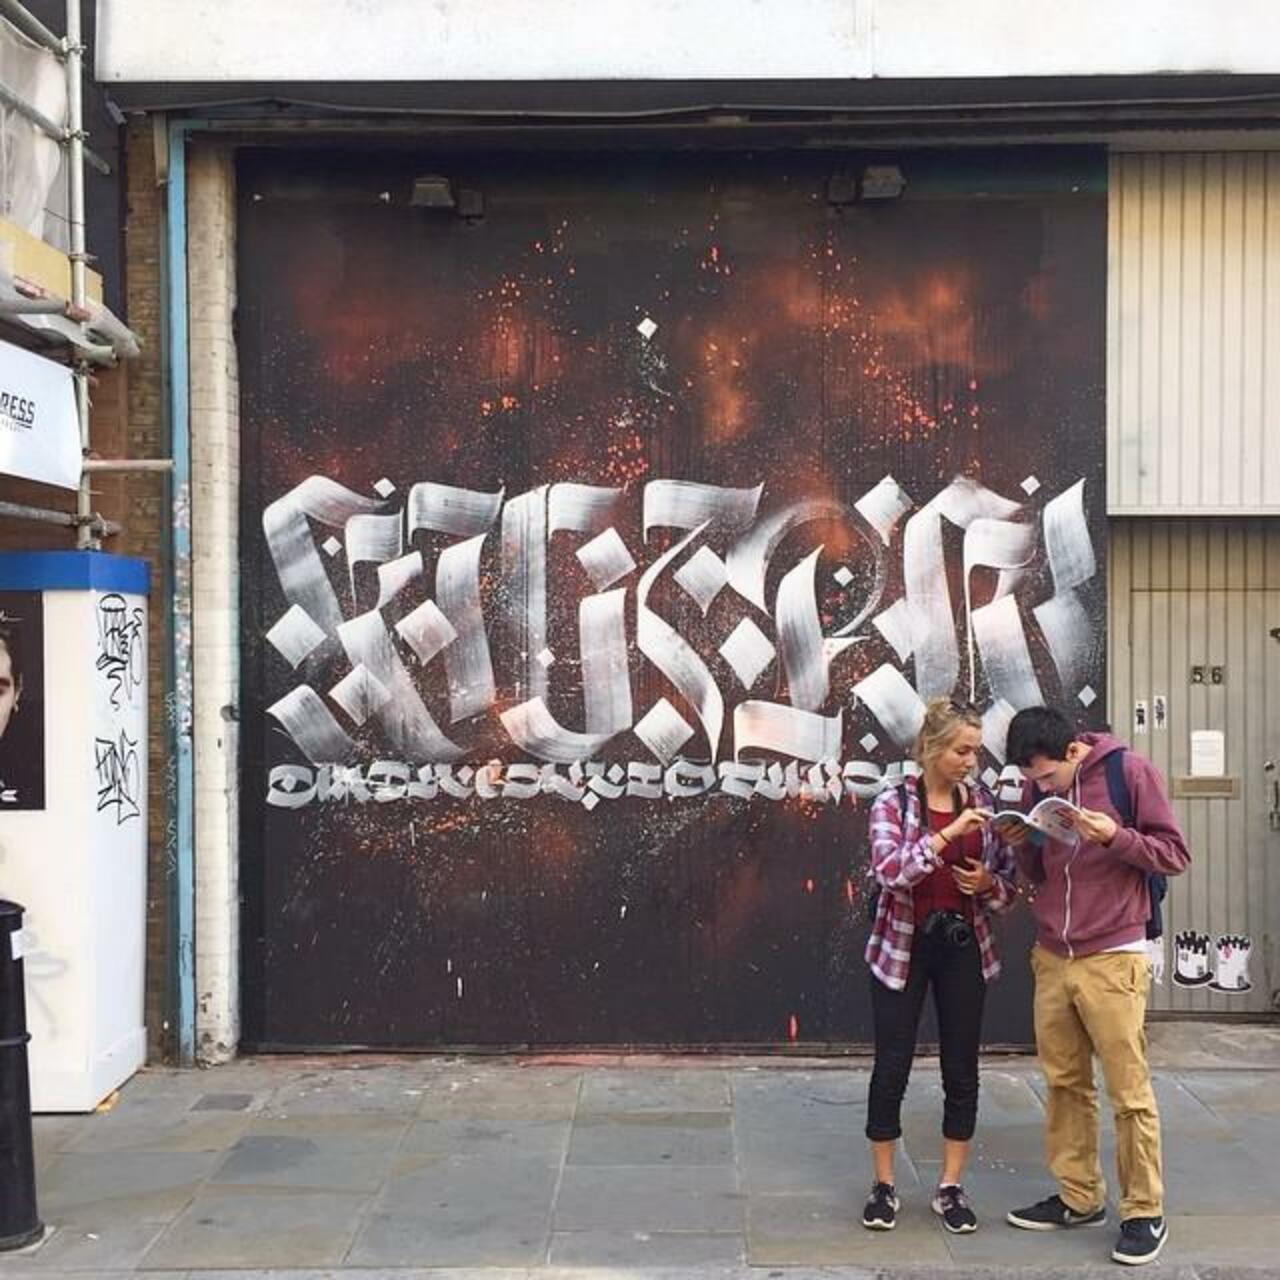 RT @StArtEverywhere: Brilliant piece by @andreariot on Redchurch street #streetart #art #graffiti #andreariot #london #StreetArtIsNotACr… http://t.co/TUKbjEfJNL